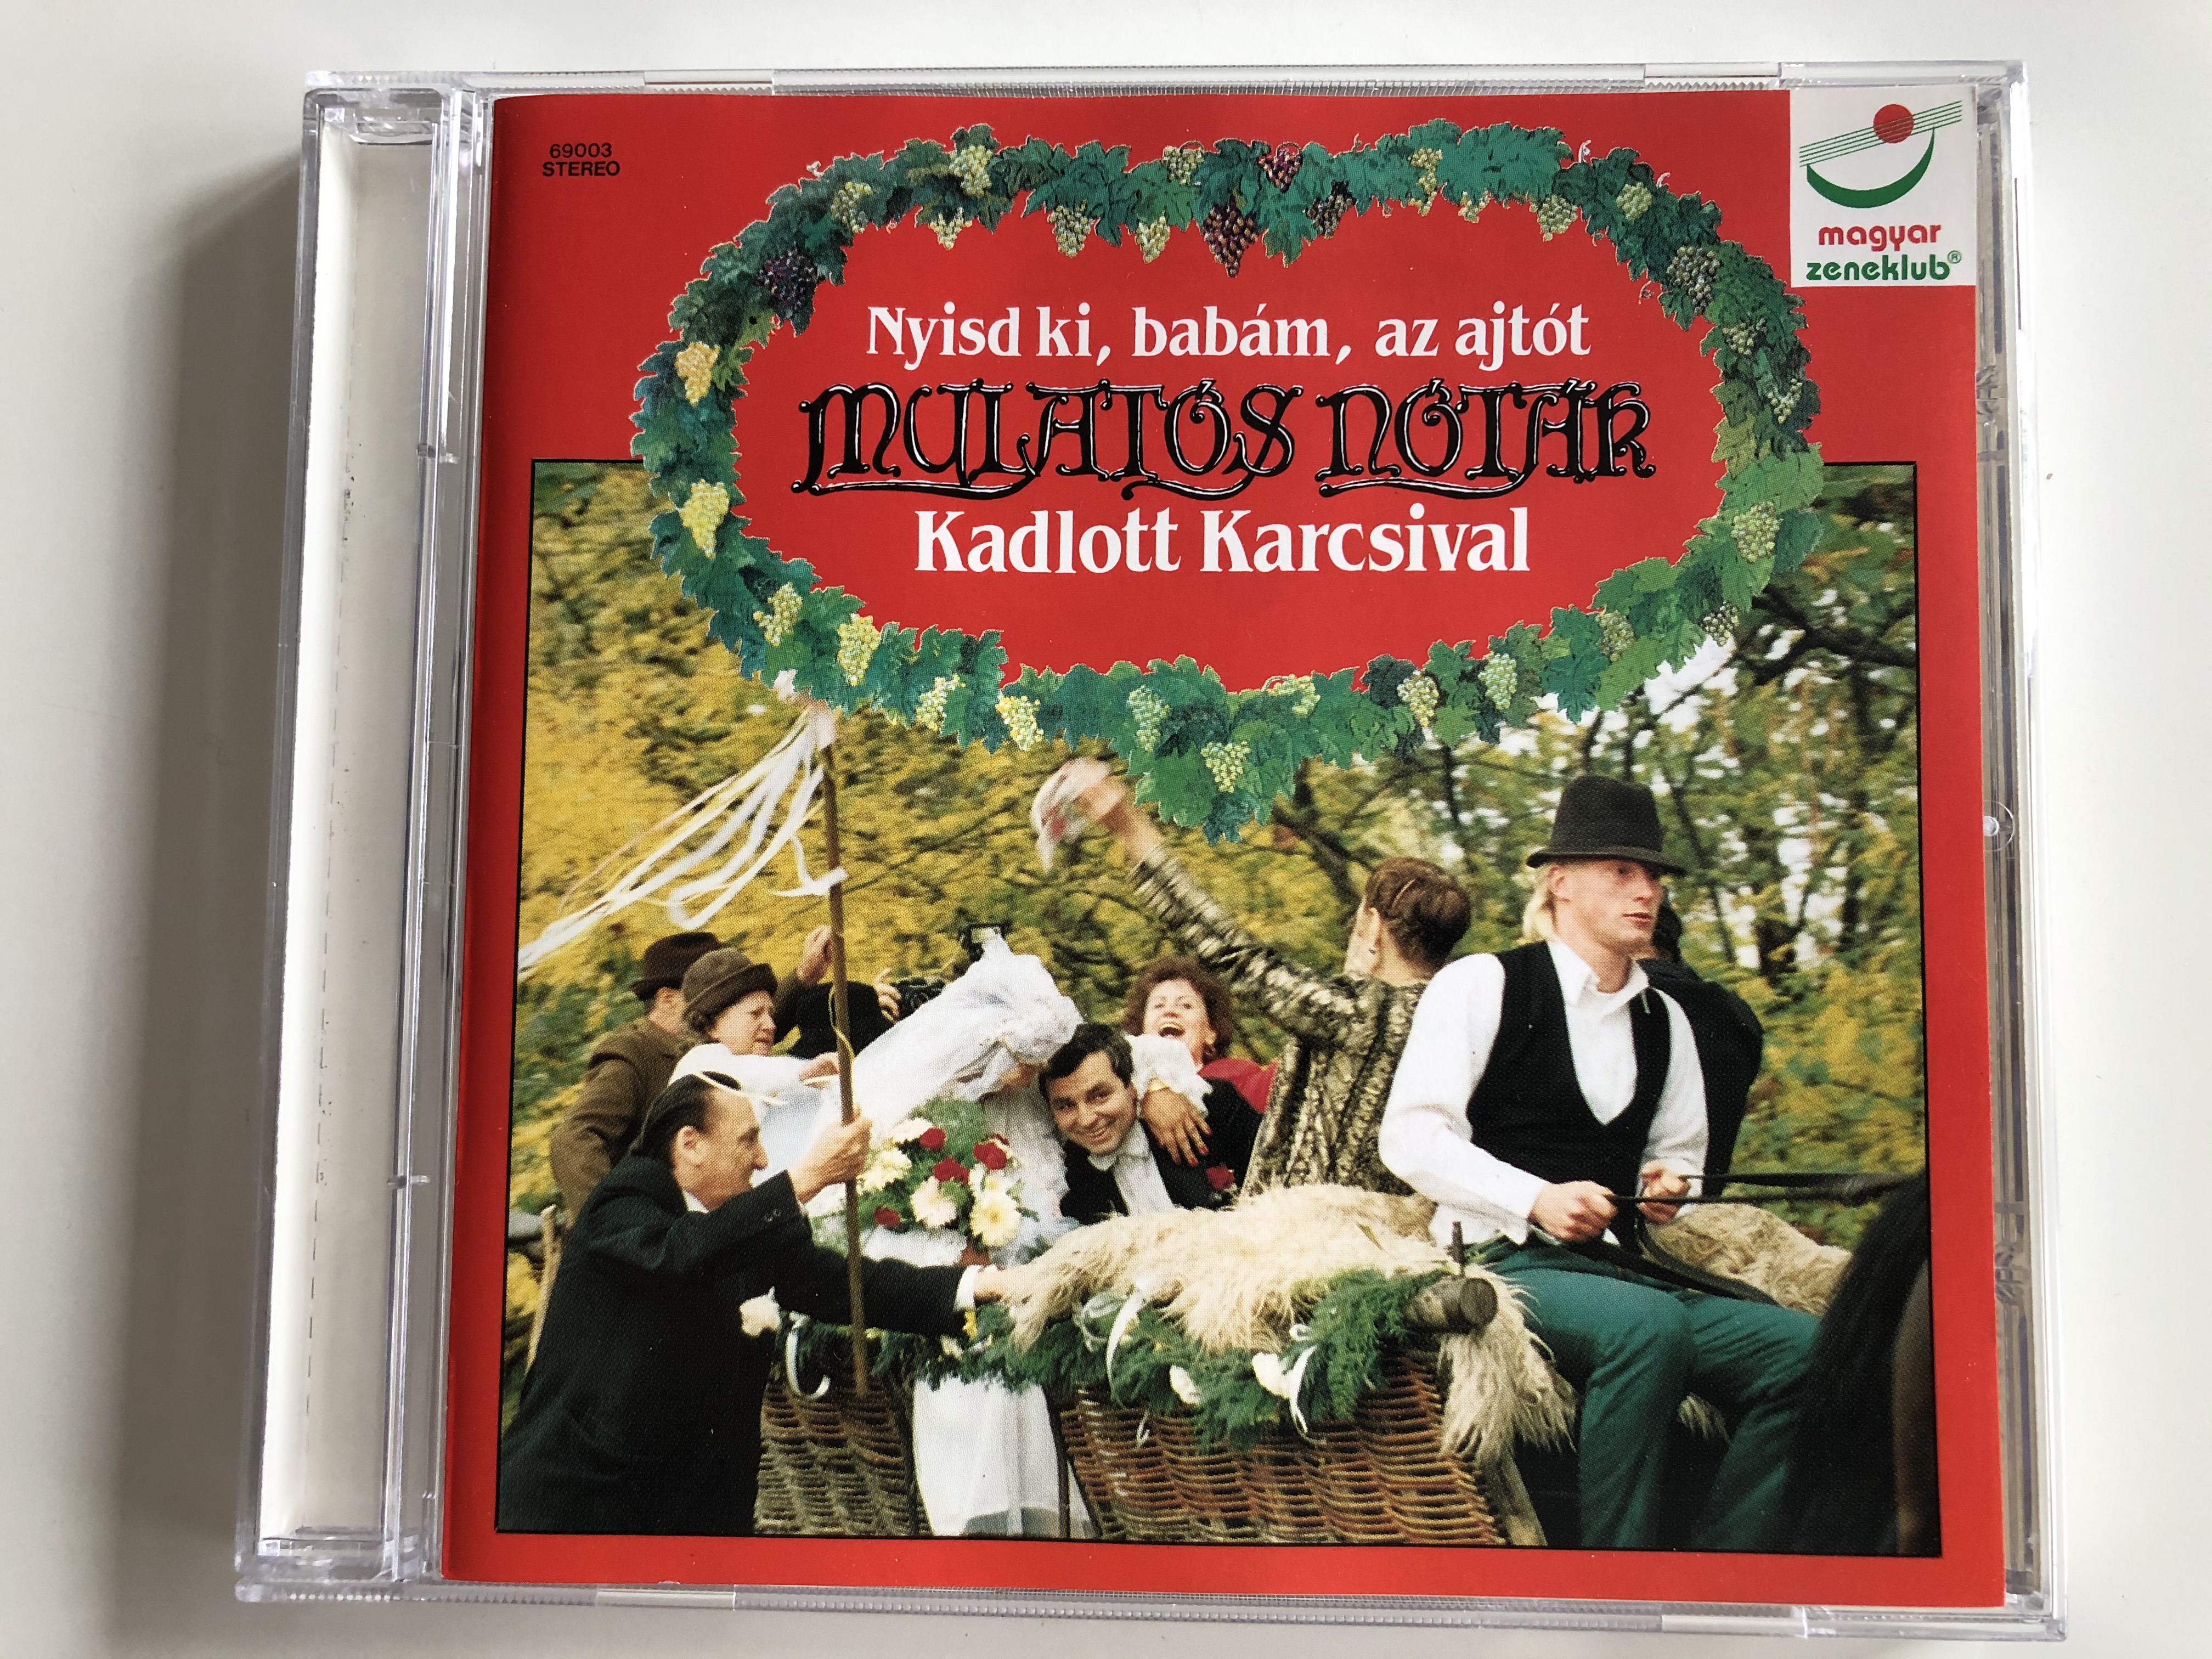 nyisd-ki-bab-m-az-ajt-t-mulat-s-n-t-k-kadlott-karcsival-magyar-k-nyvklub-audio-cd-1994-stereo-69003-1-.jpg